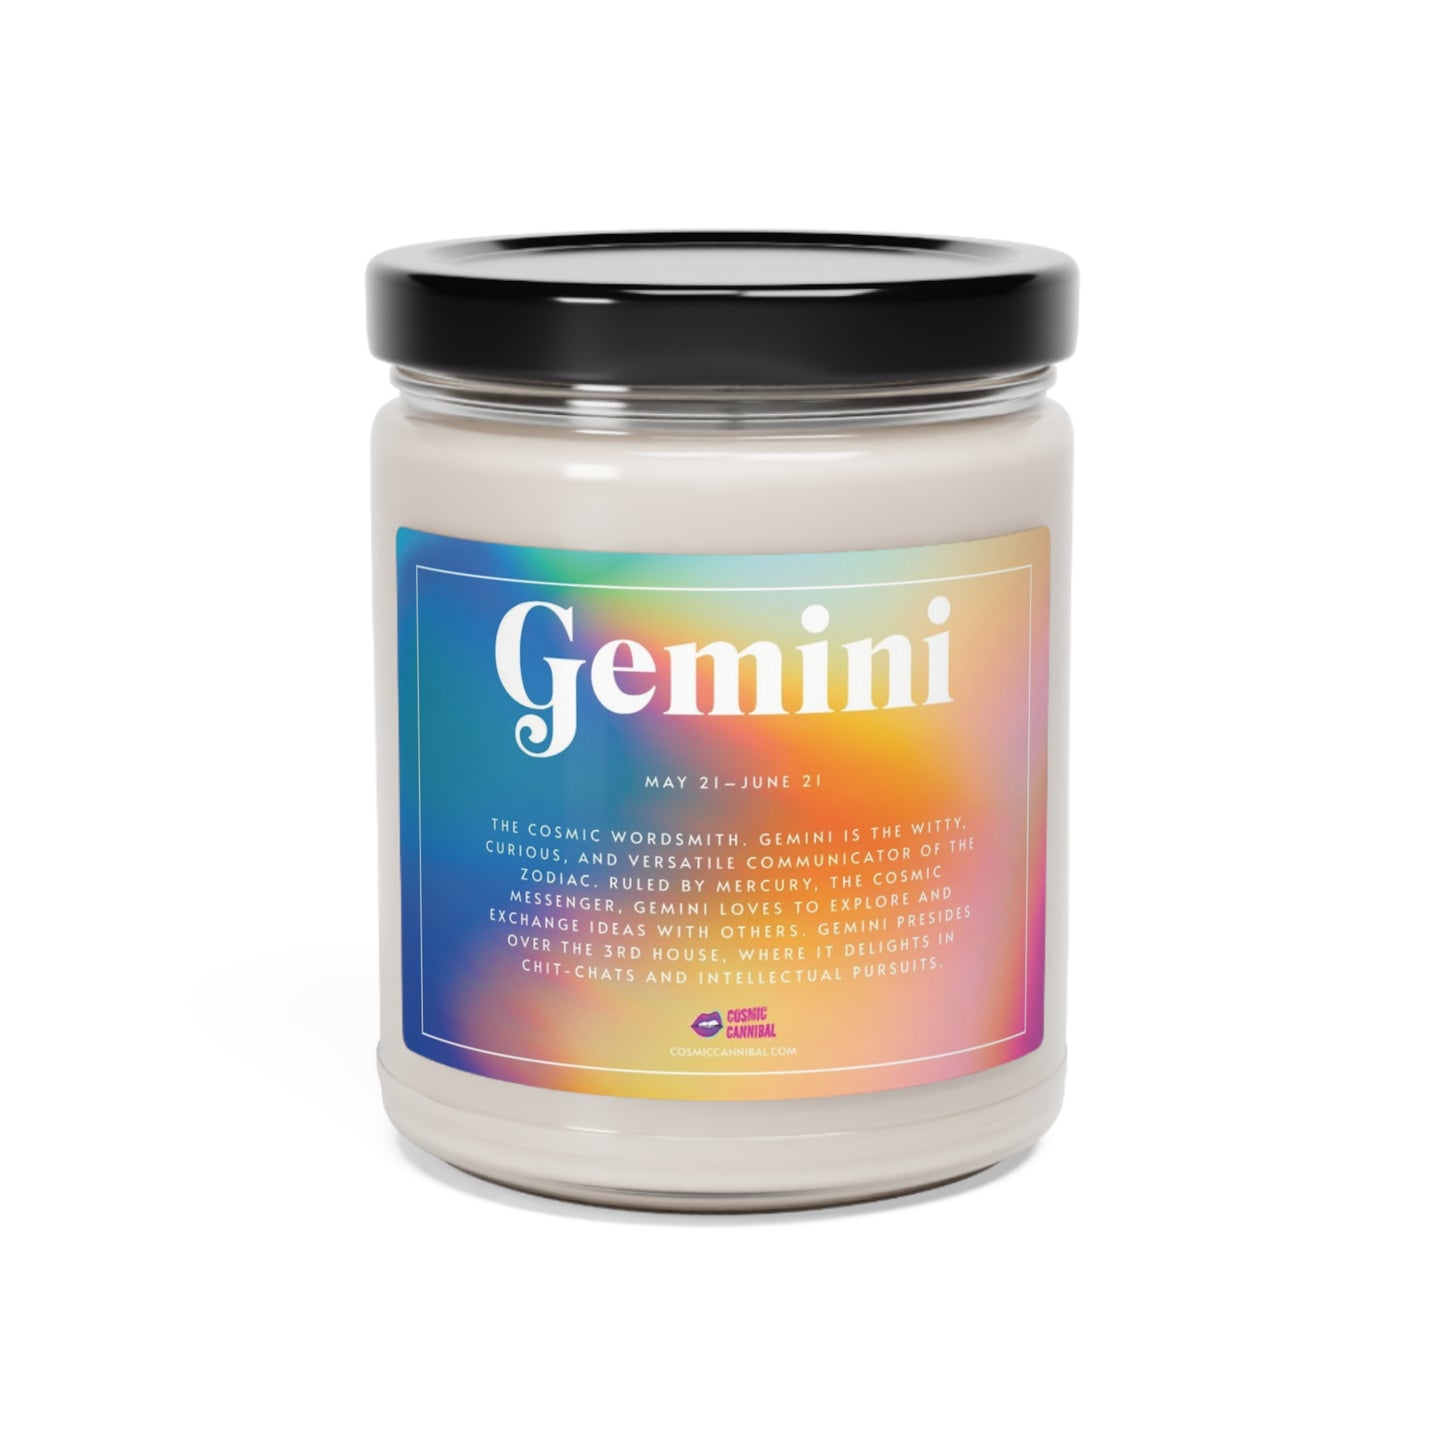 The Gemini Candle